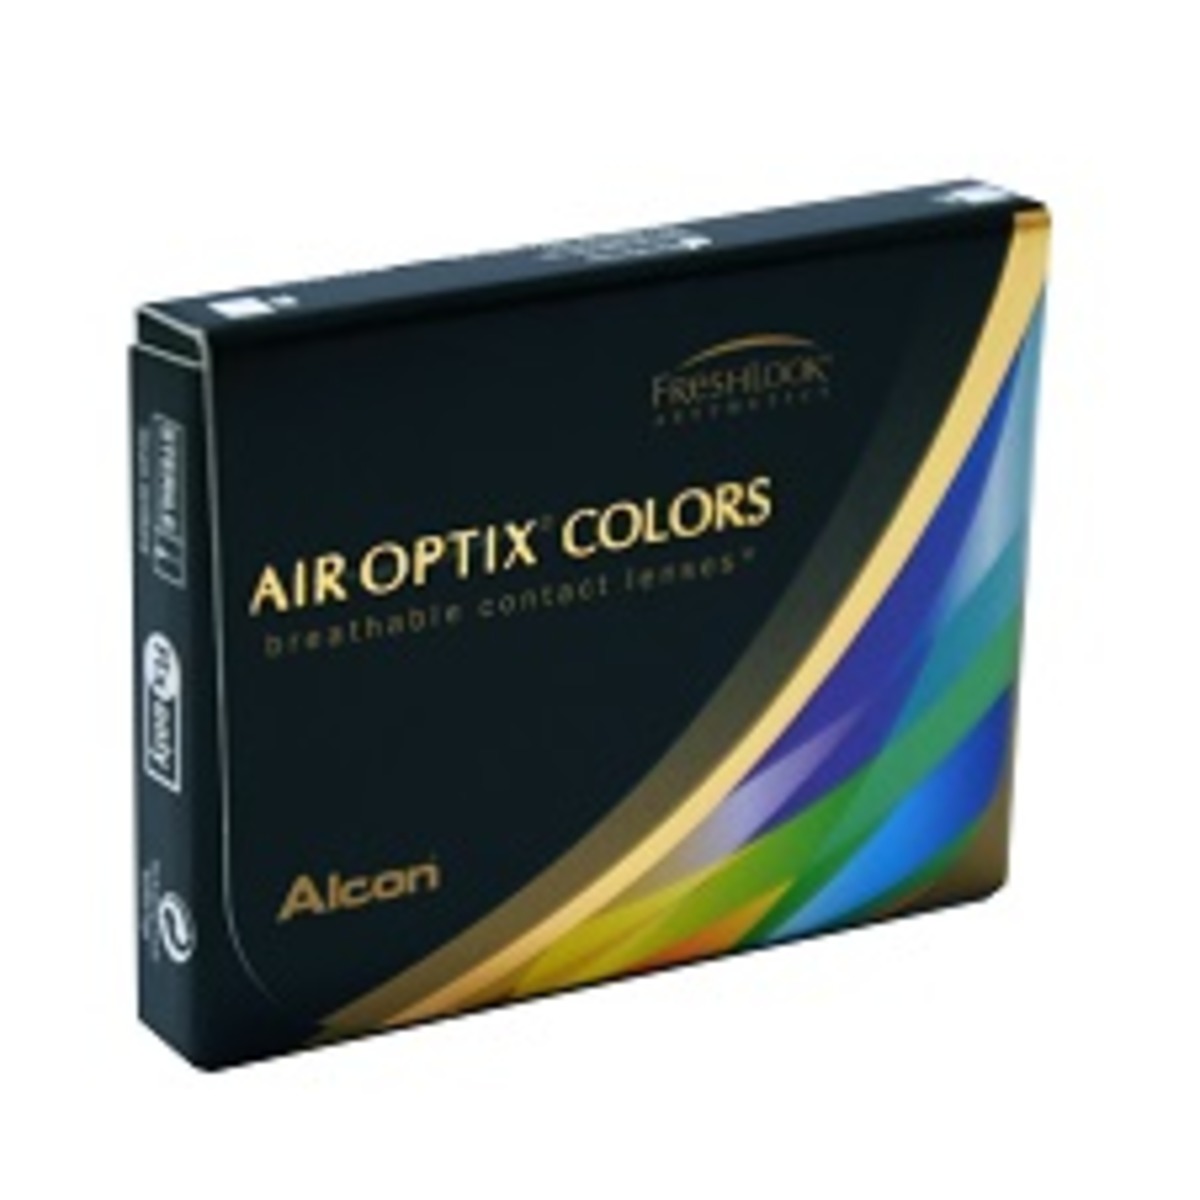 Air Optix Colors Cannelle (Brown)